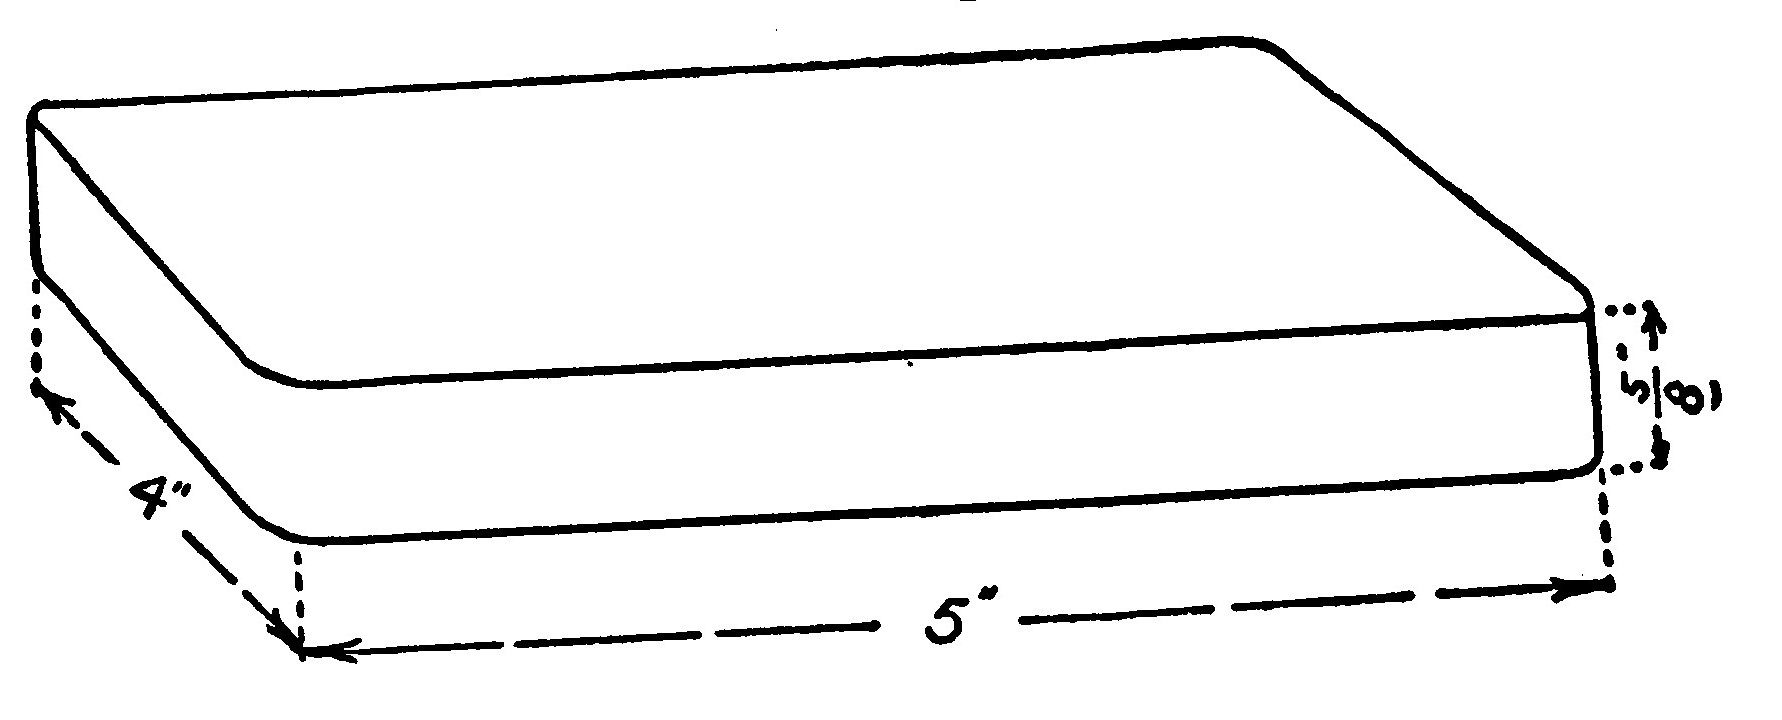 Fig. 259.—Details of the Wooden Base.